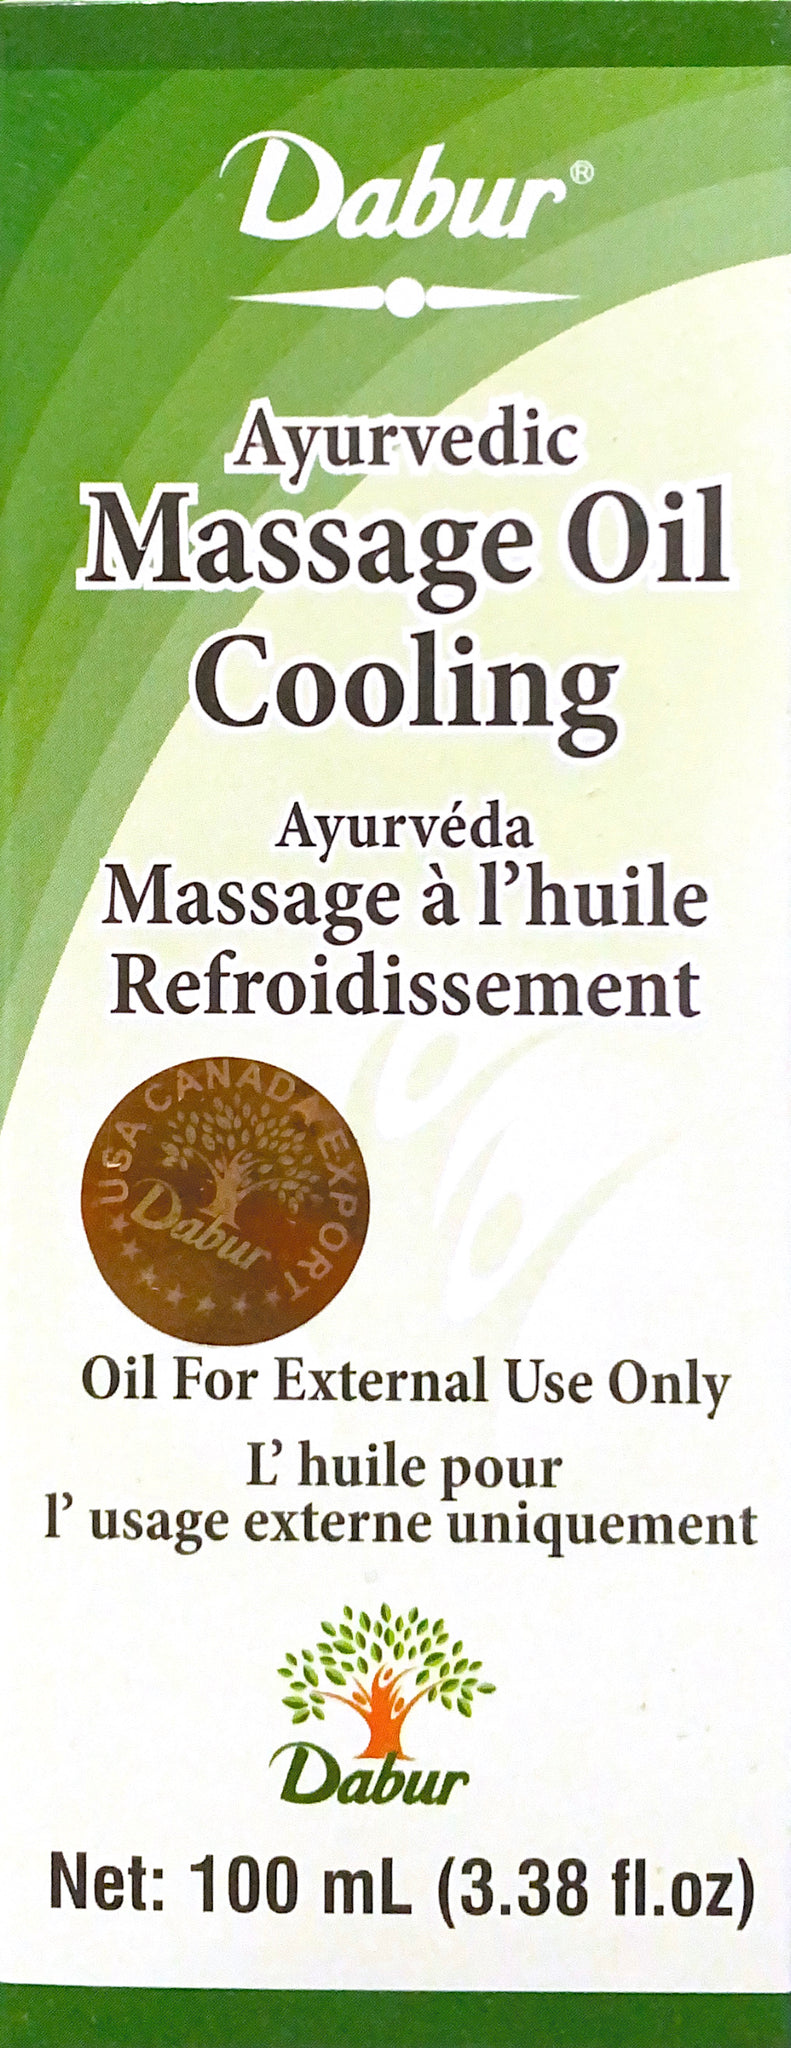 Ayurvedic Massage Oil Cooling